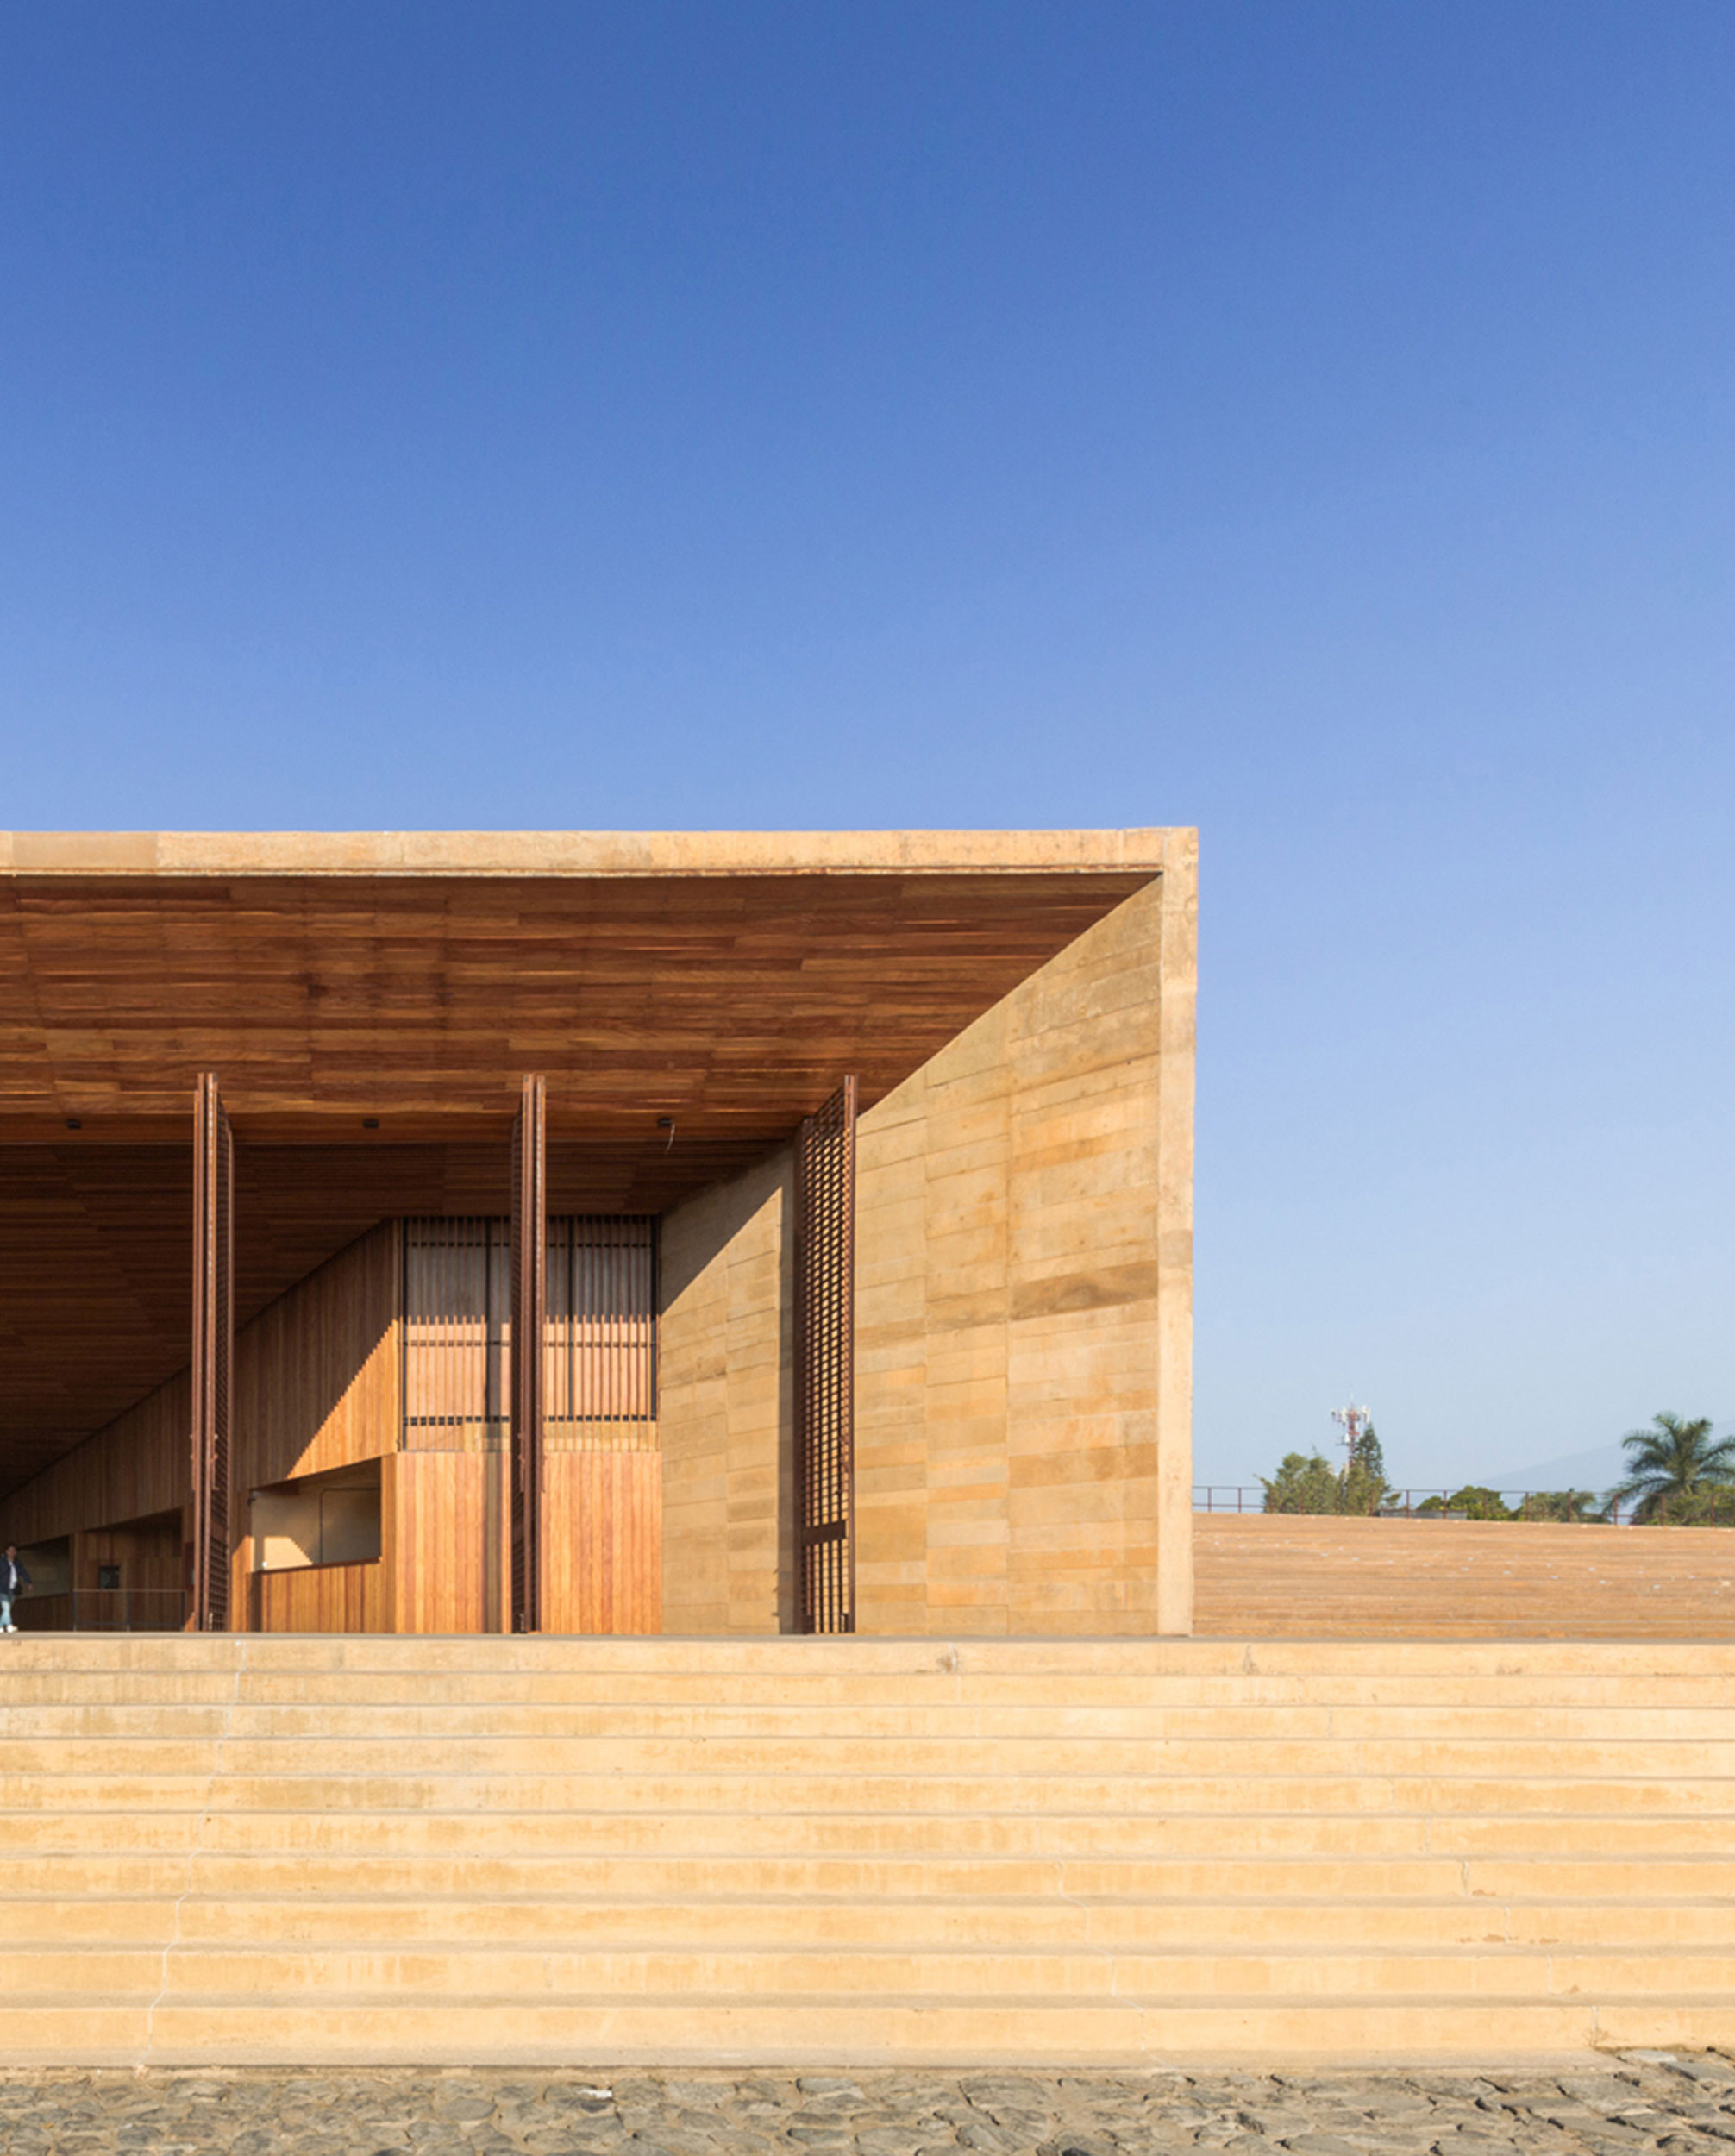 Teopanzolco Cultural Center, Oscar Niemeyer Prize 2018